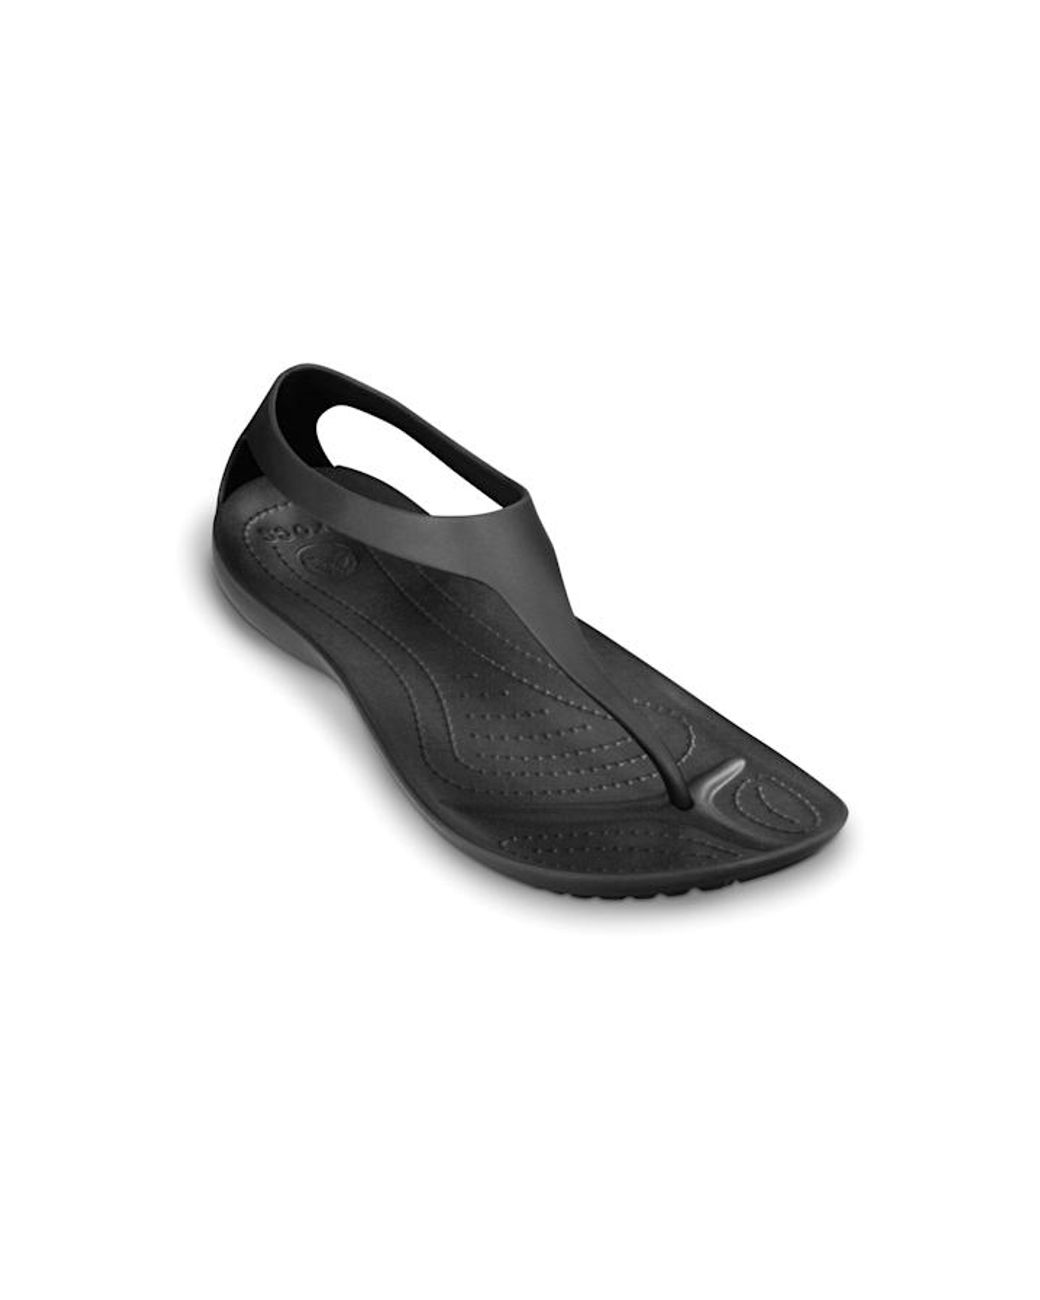 Crocs™ Sexi Flip in Black/Black (Black) - Save 61% | Lyst